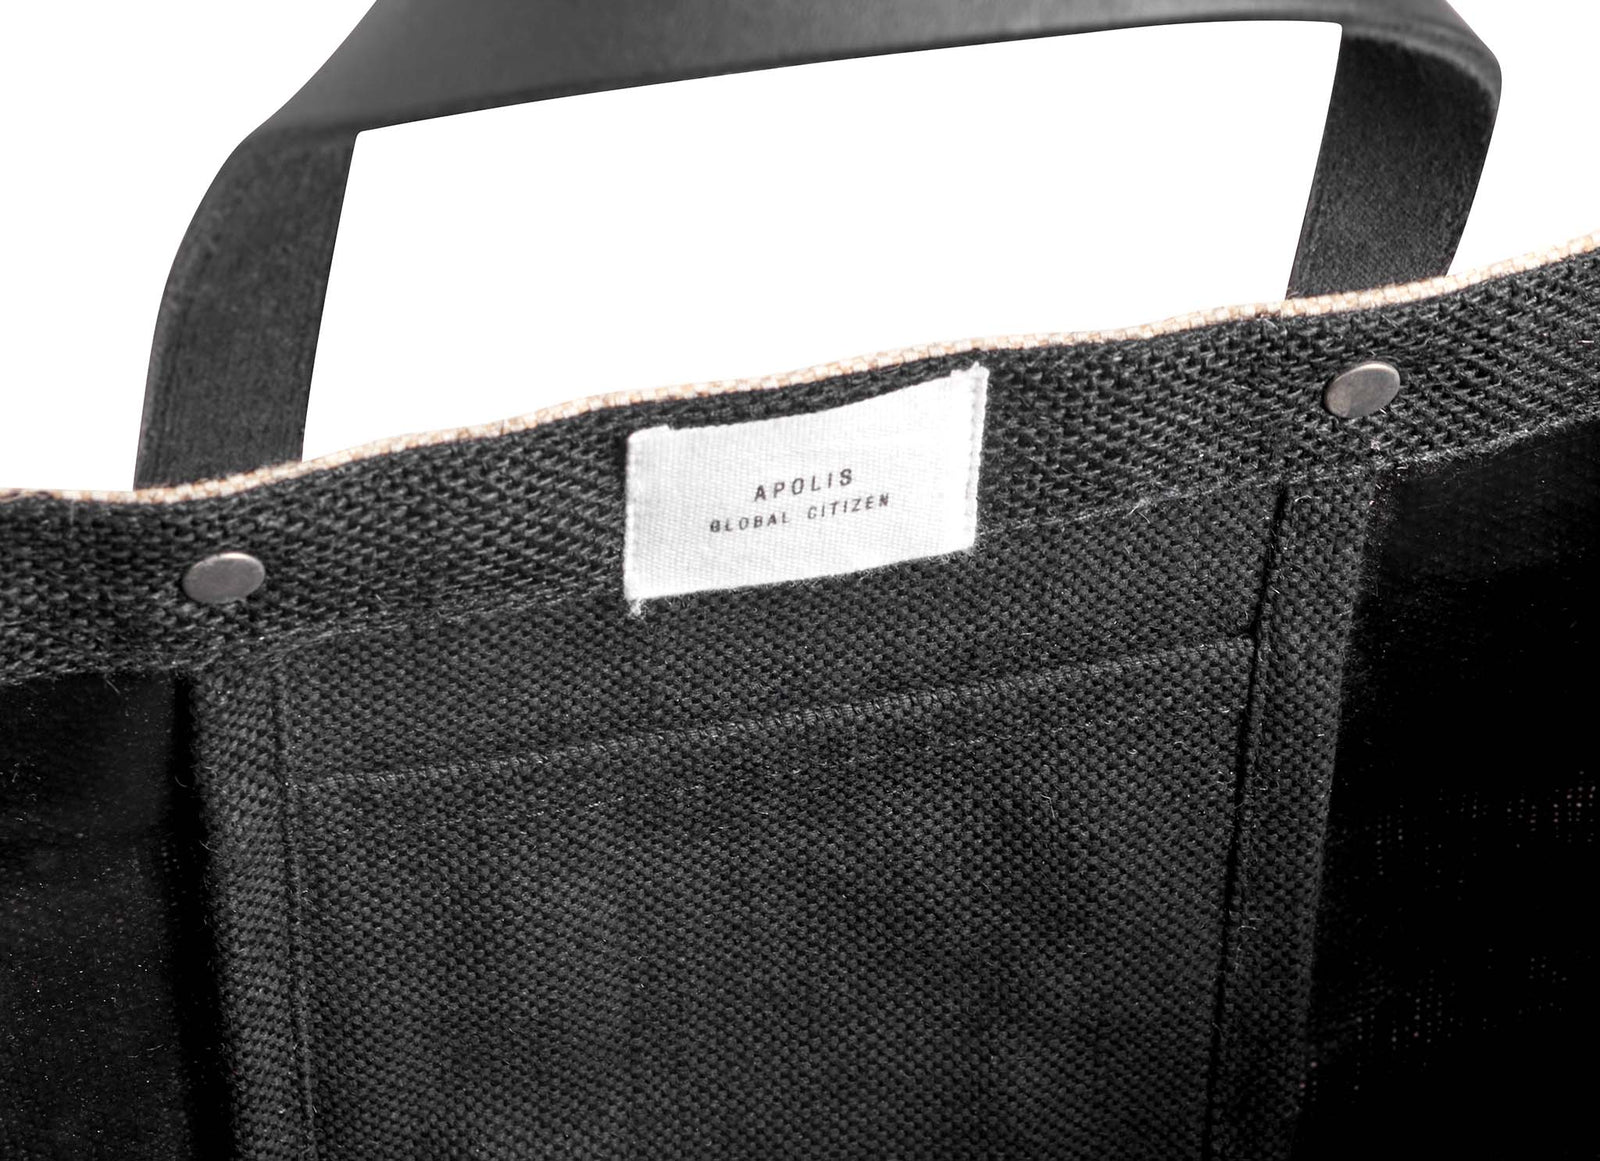 Petite Market Bag in Black with Black Strap - Wholesale